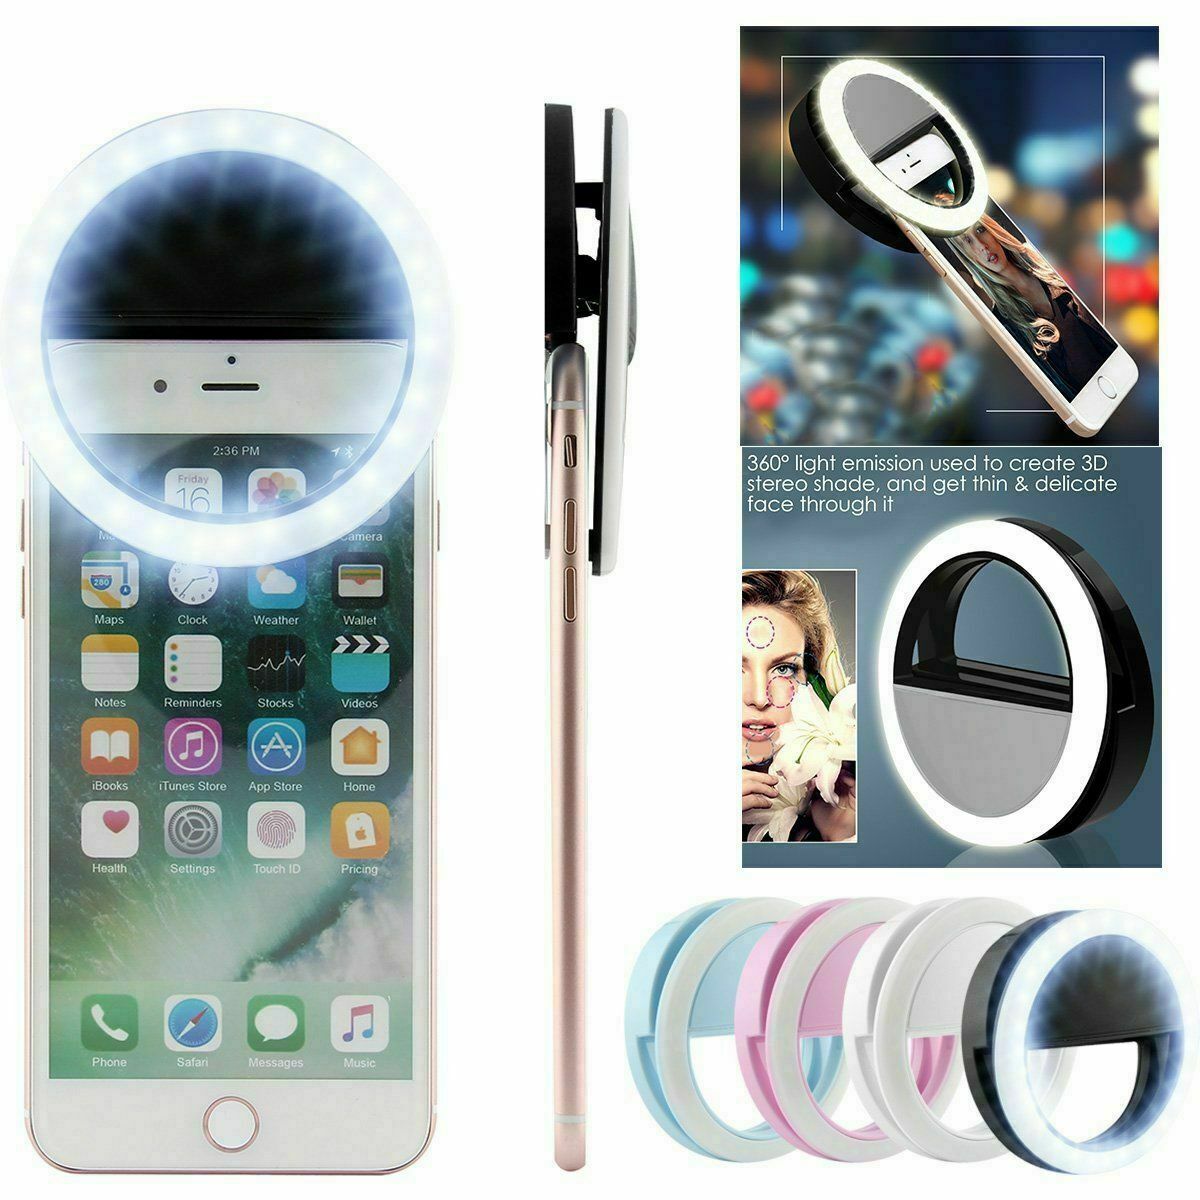 AUTOPkio Selfie Ring Light, 36 LED Light Ring USB Ricaricabile Regolabile 3 Livelli Luminosità con Clip per Smartphone Webcast Youtube Tiktok (Nero)